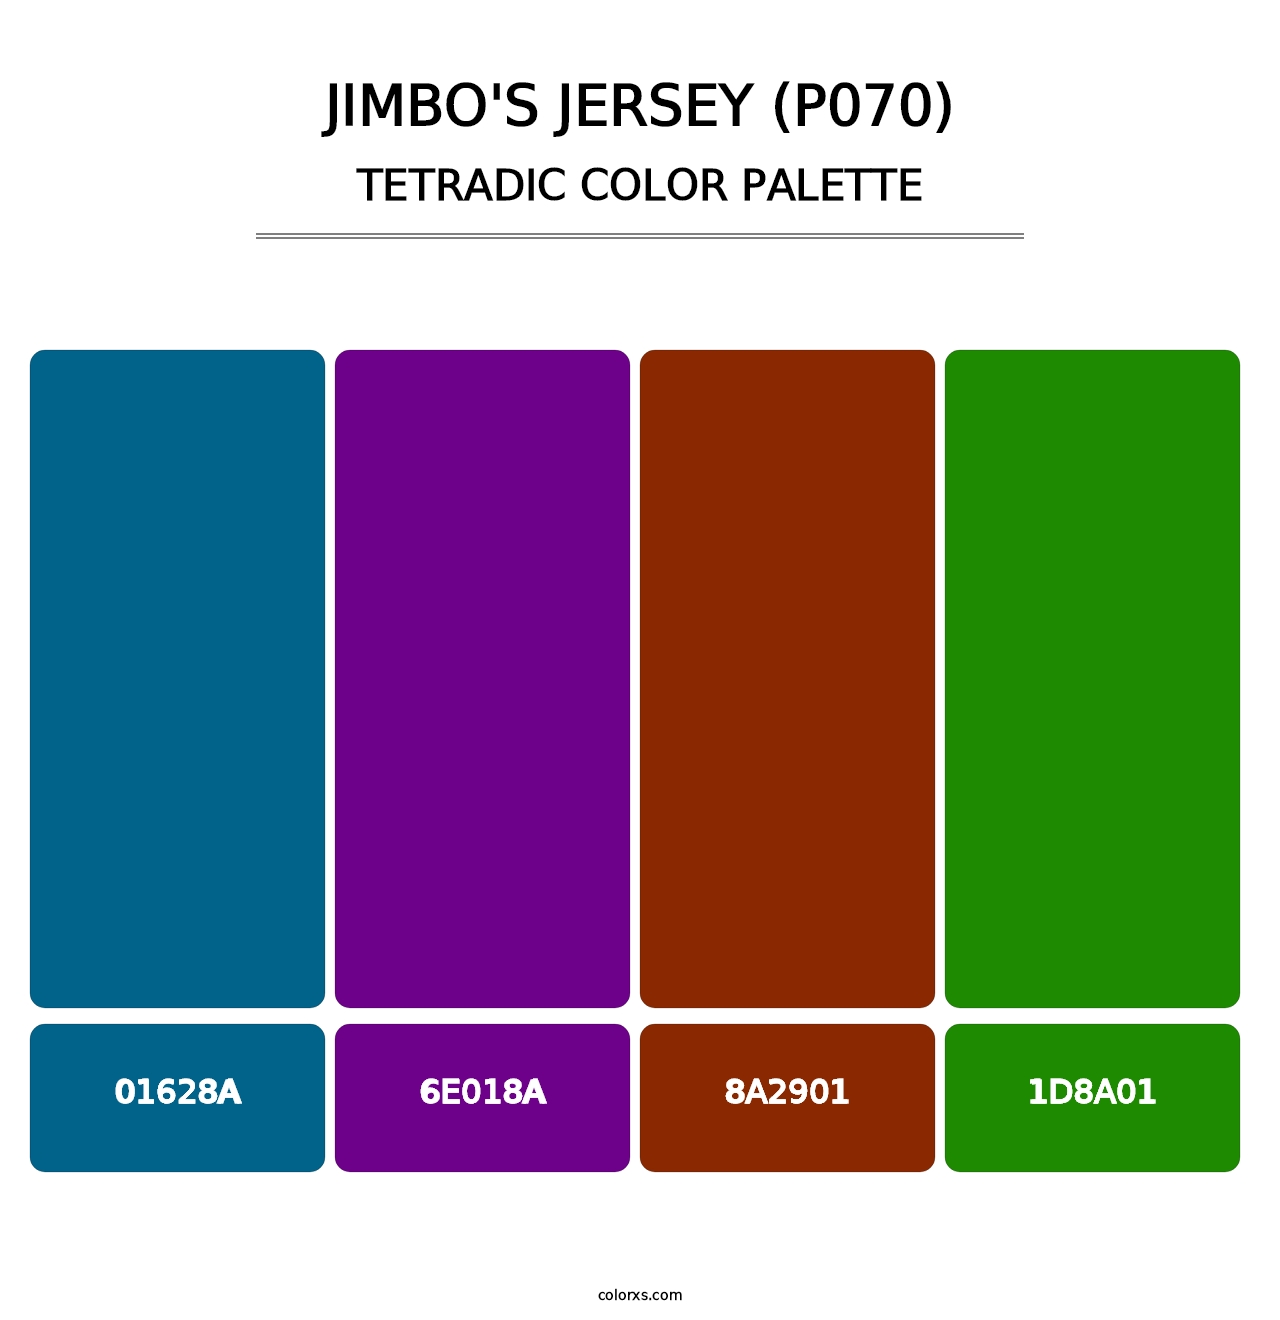 Jimbo's Jersey (P070) - Tetradic Color Palette